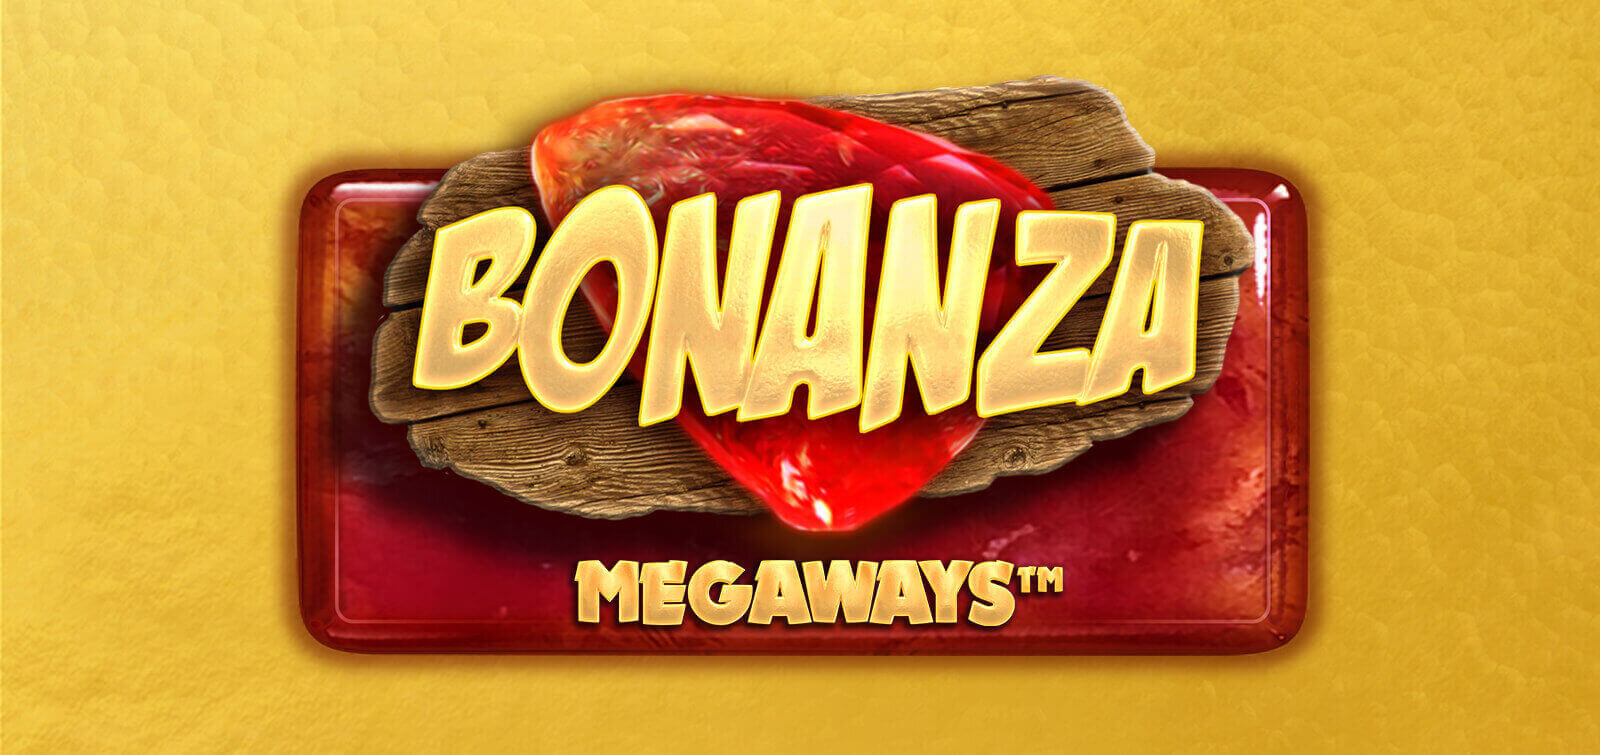 Bonanza Megaways tragamonedas megaways Chile